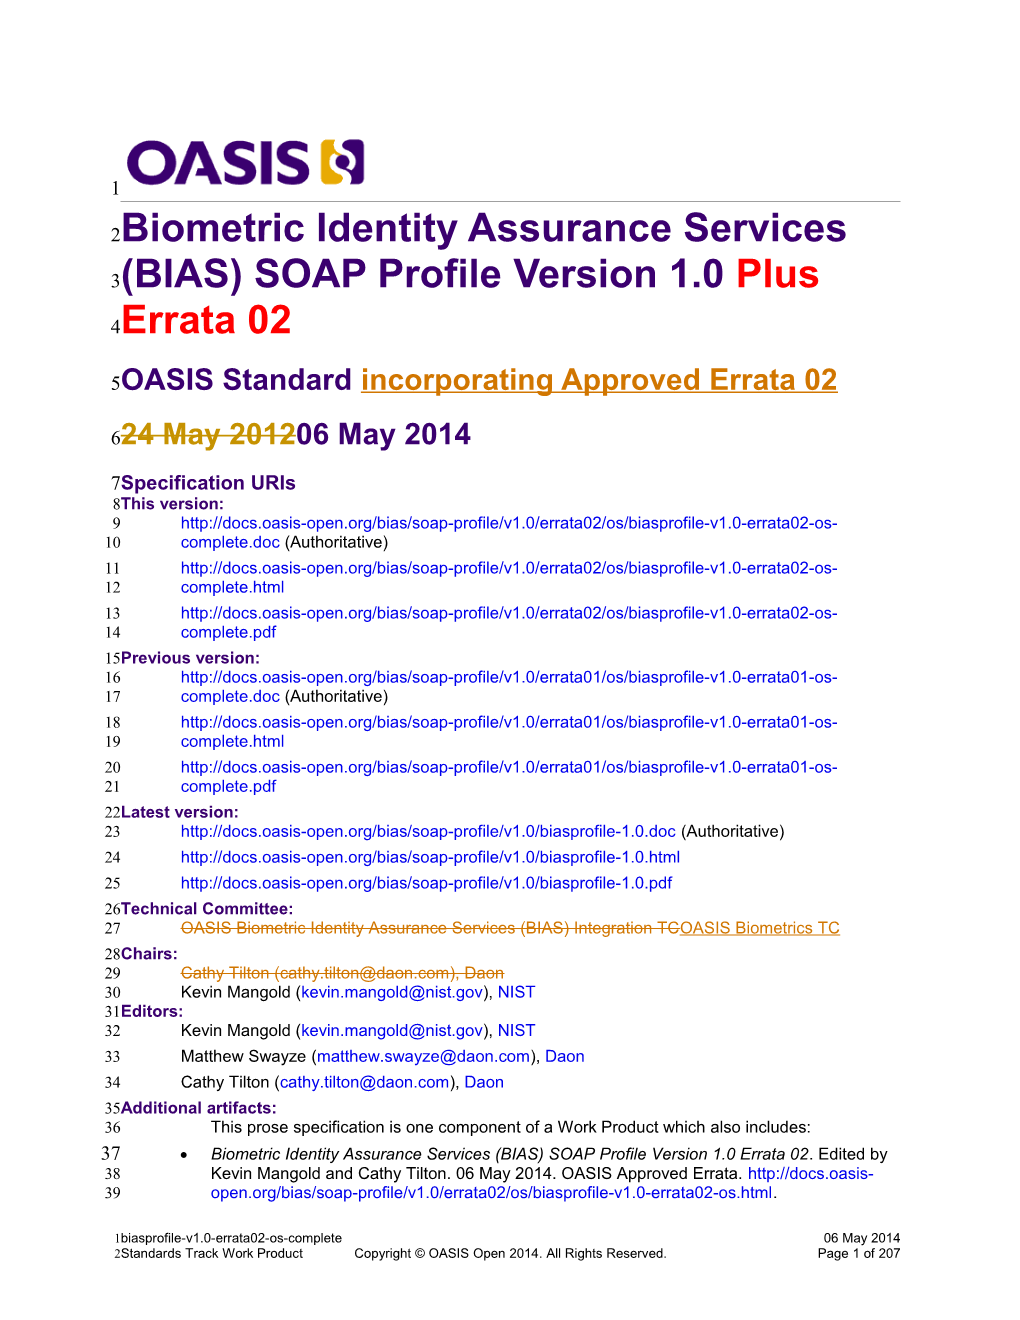 Biometric Identity Assurance Services (BIAS) SOAP Profile Version 1.0 Plus Errata 02